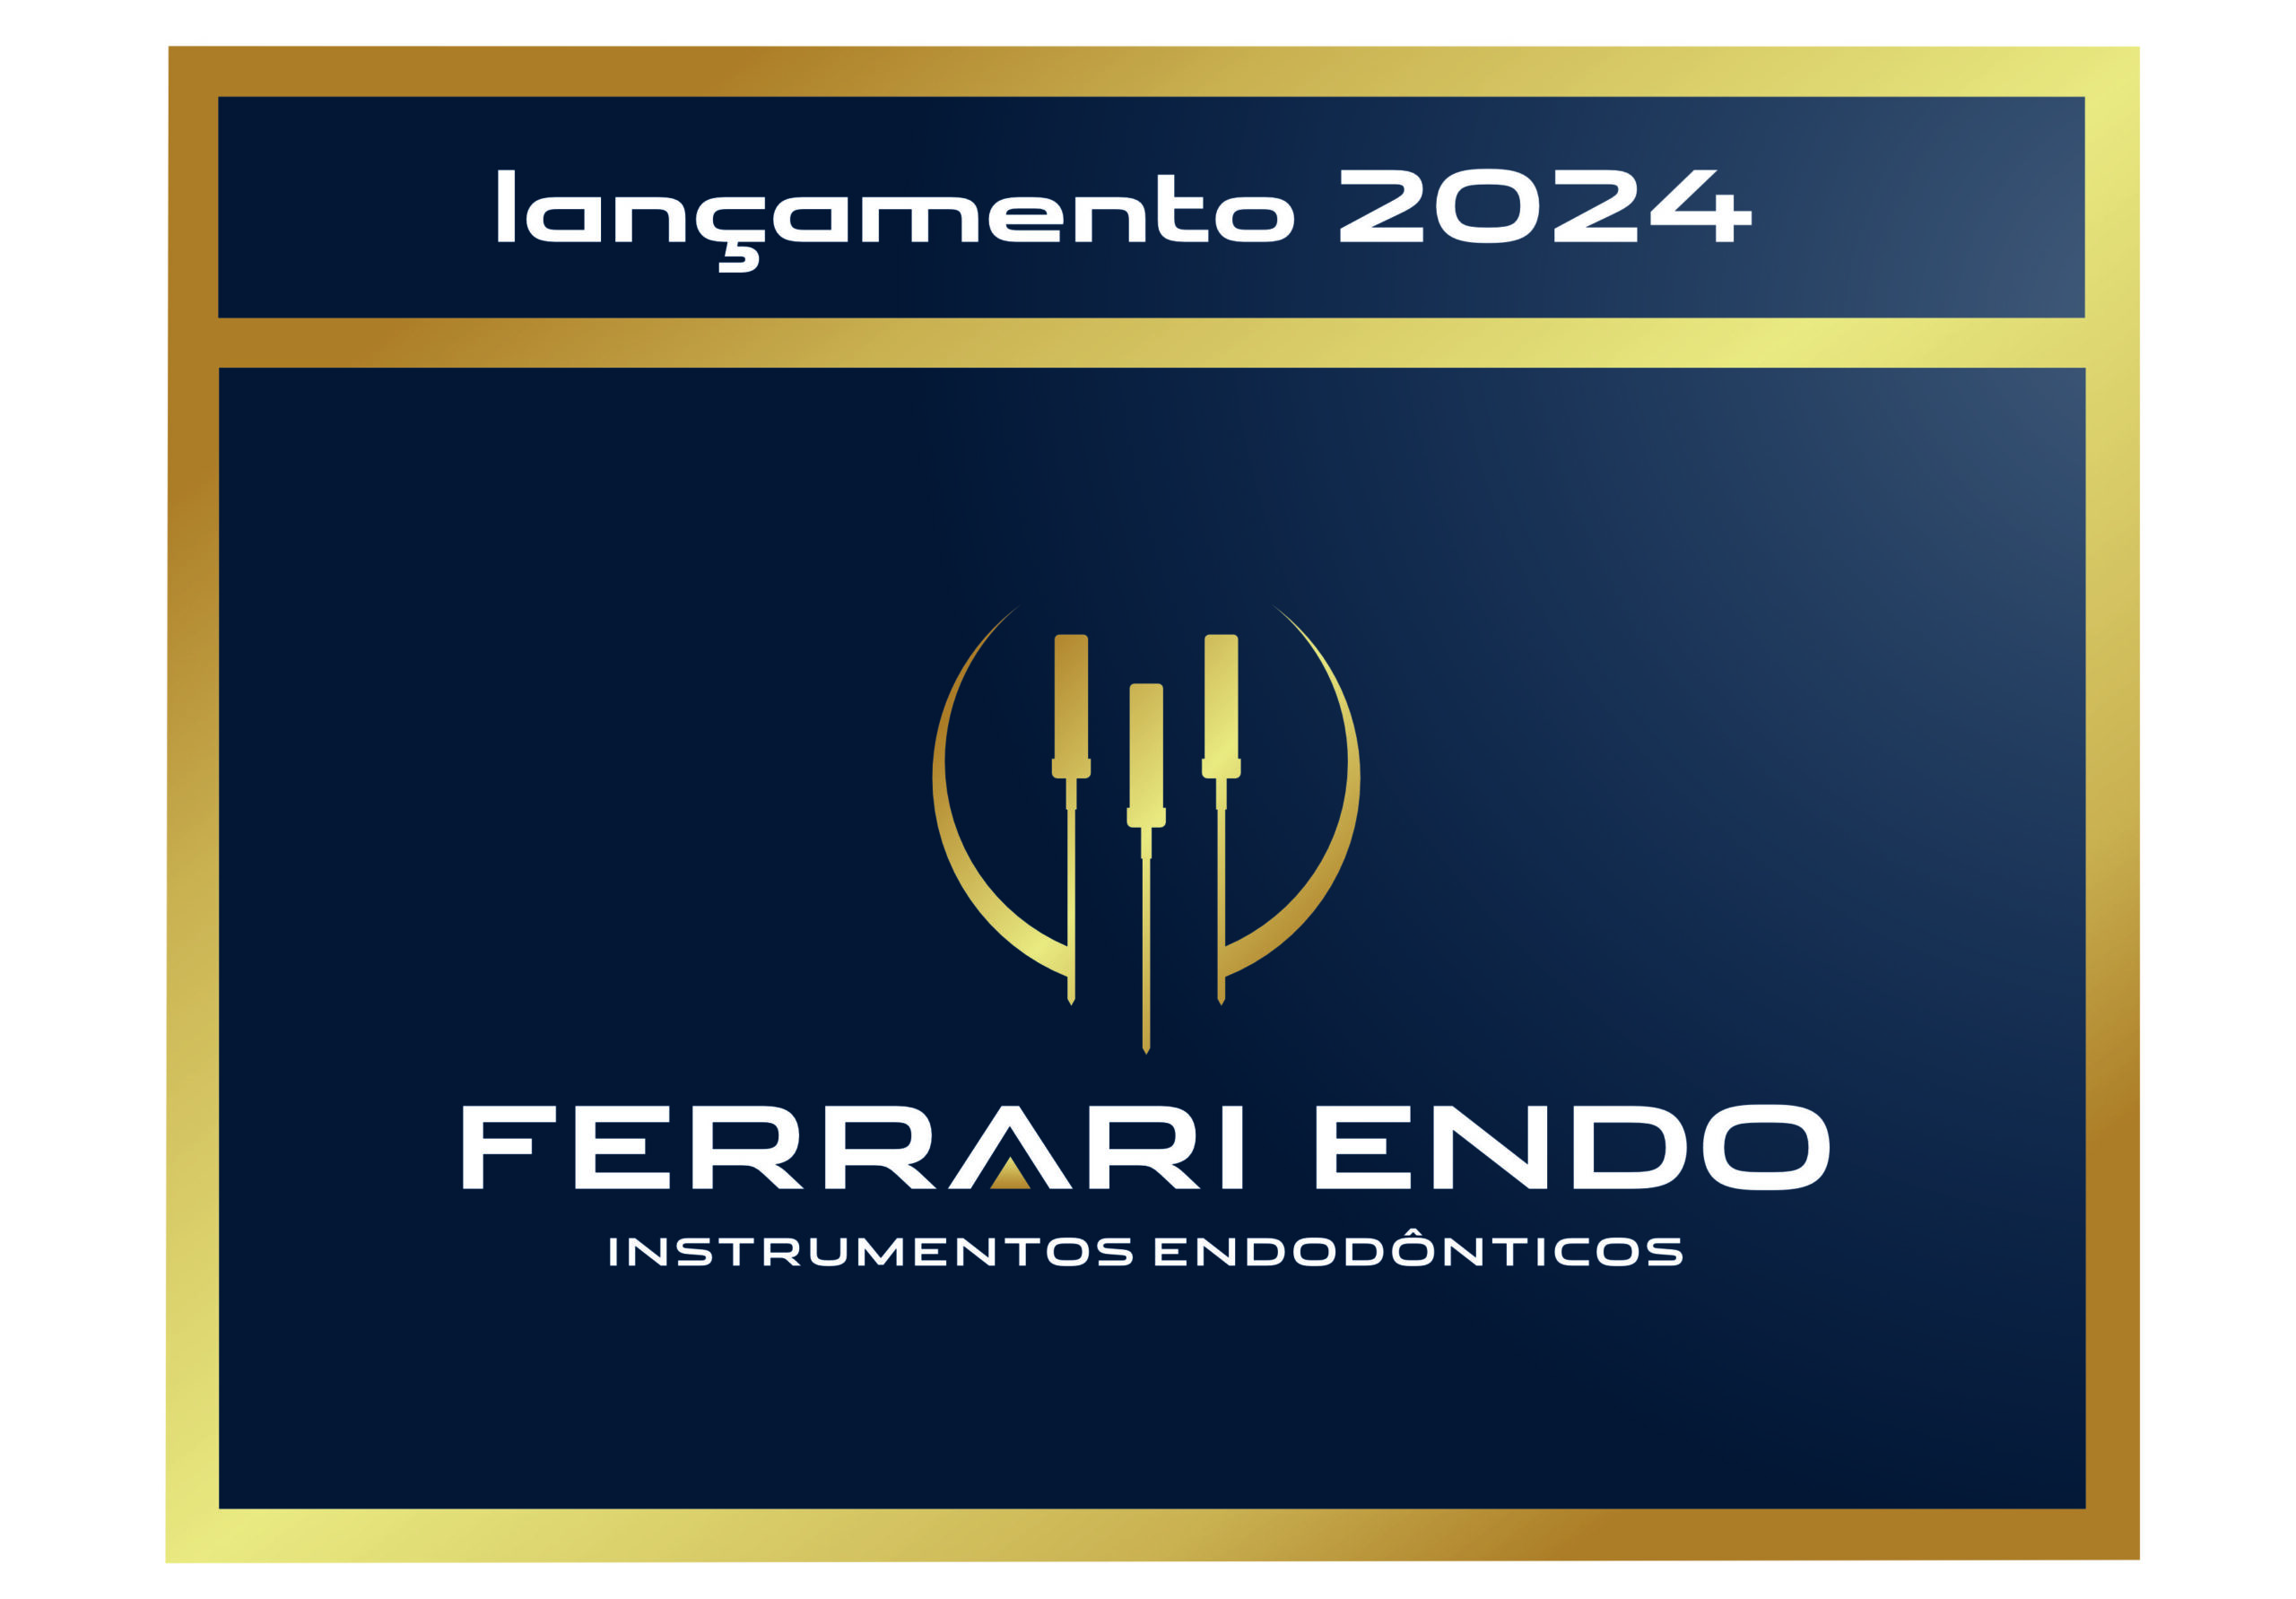 You are currently viewing Ferrari Endo. Instrumentos endodônticos.